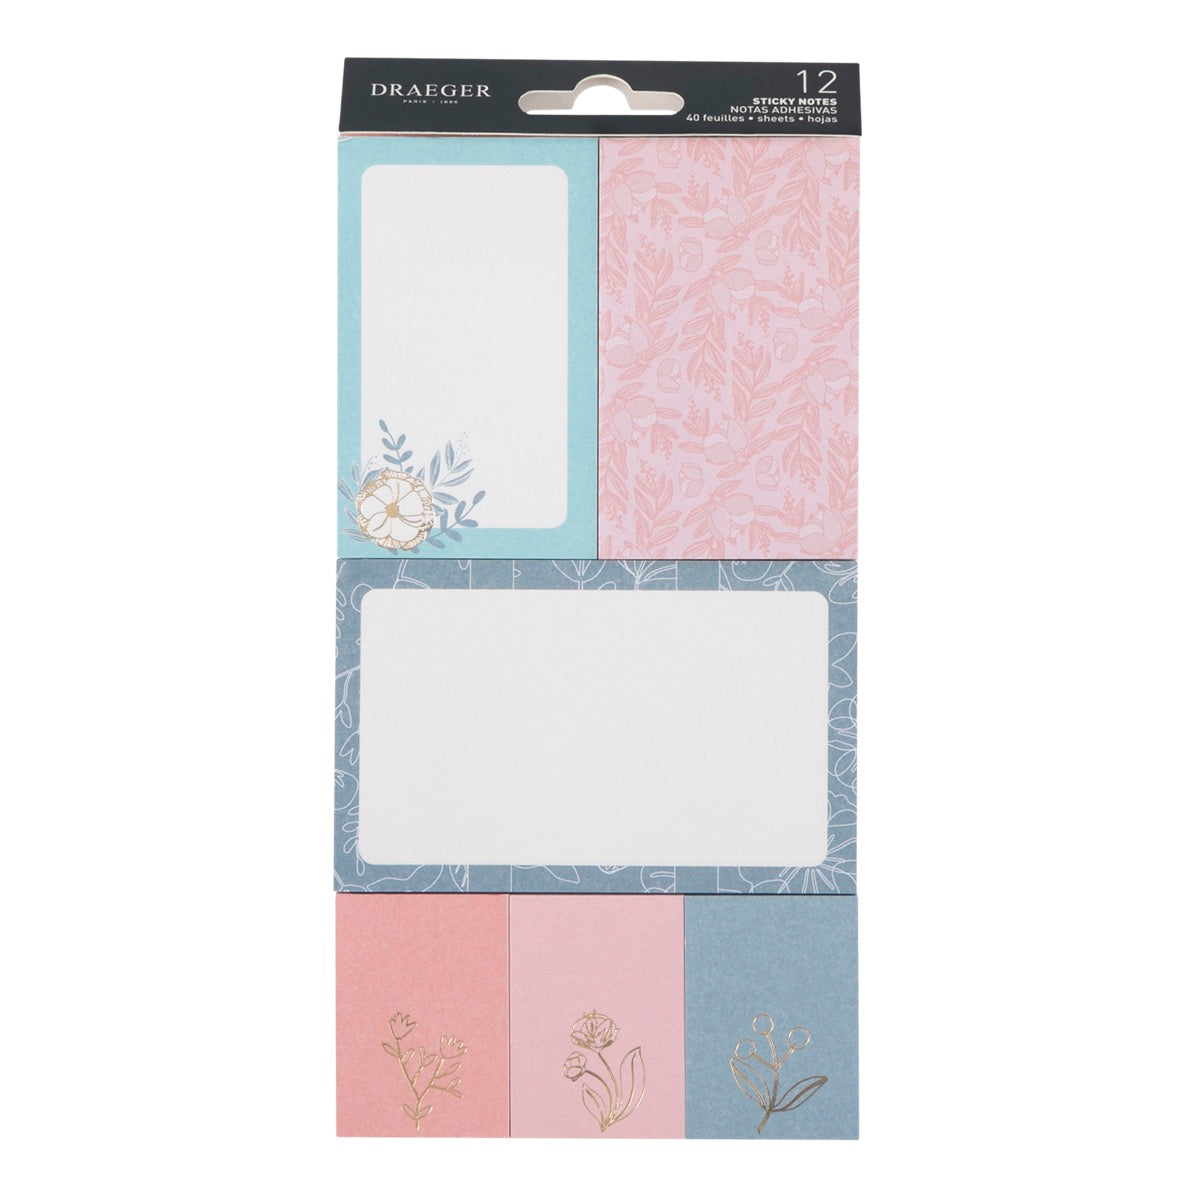 12 blocks of Sticky notes - pastel, floral